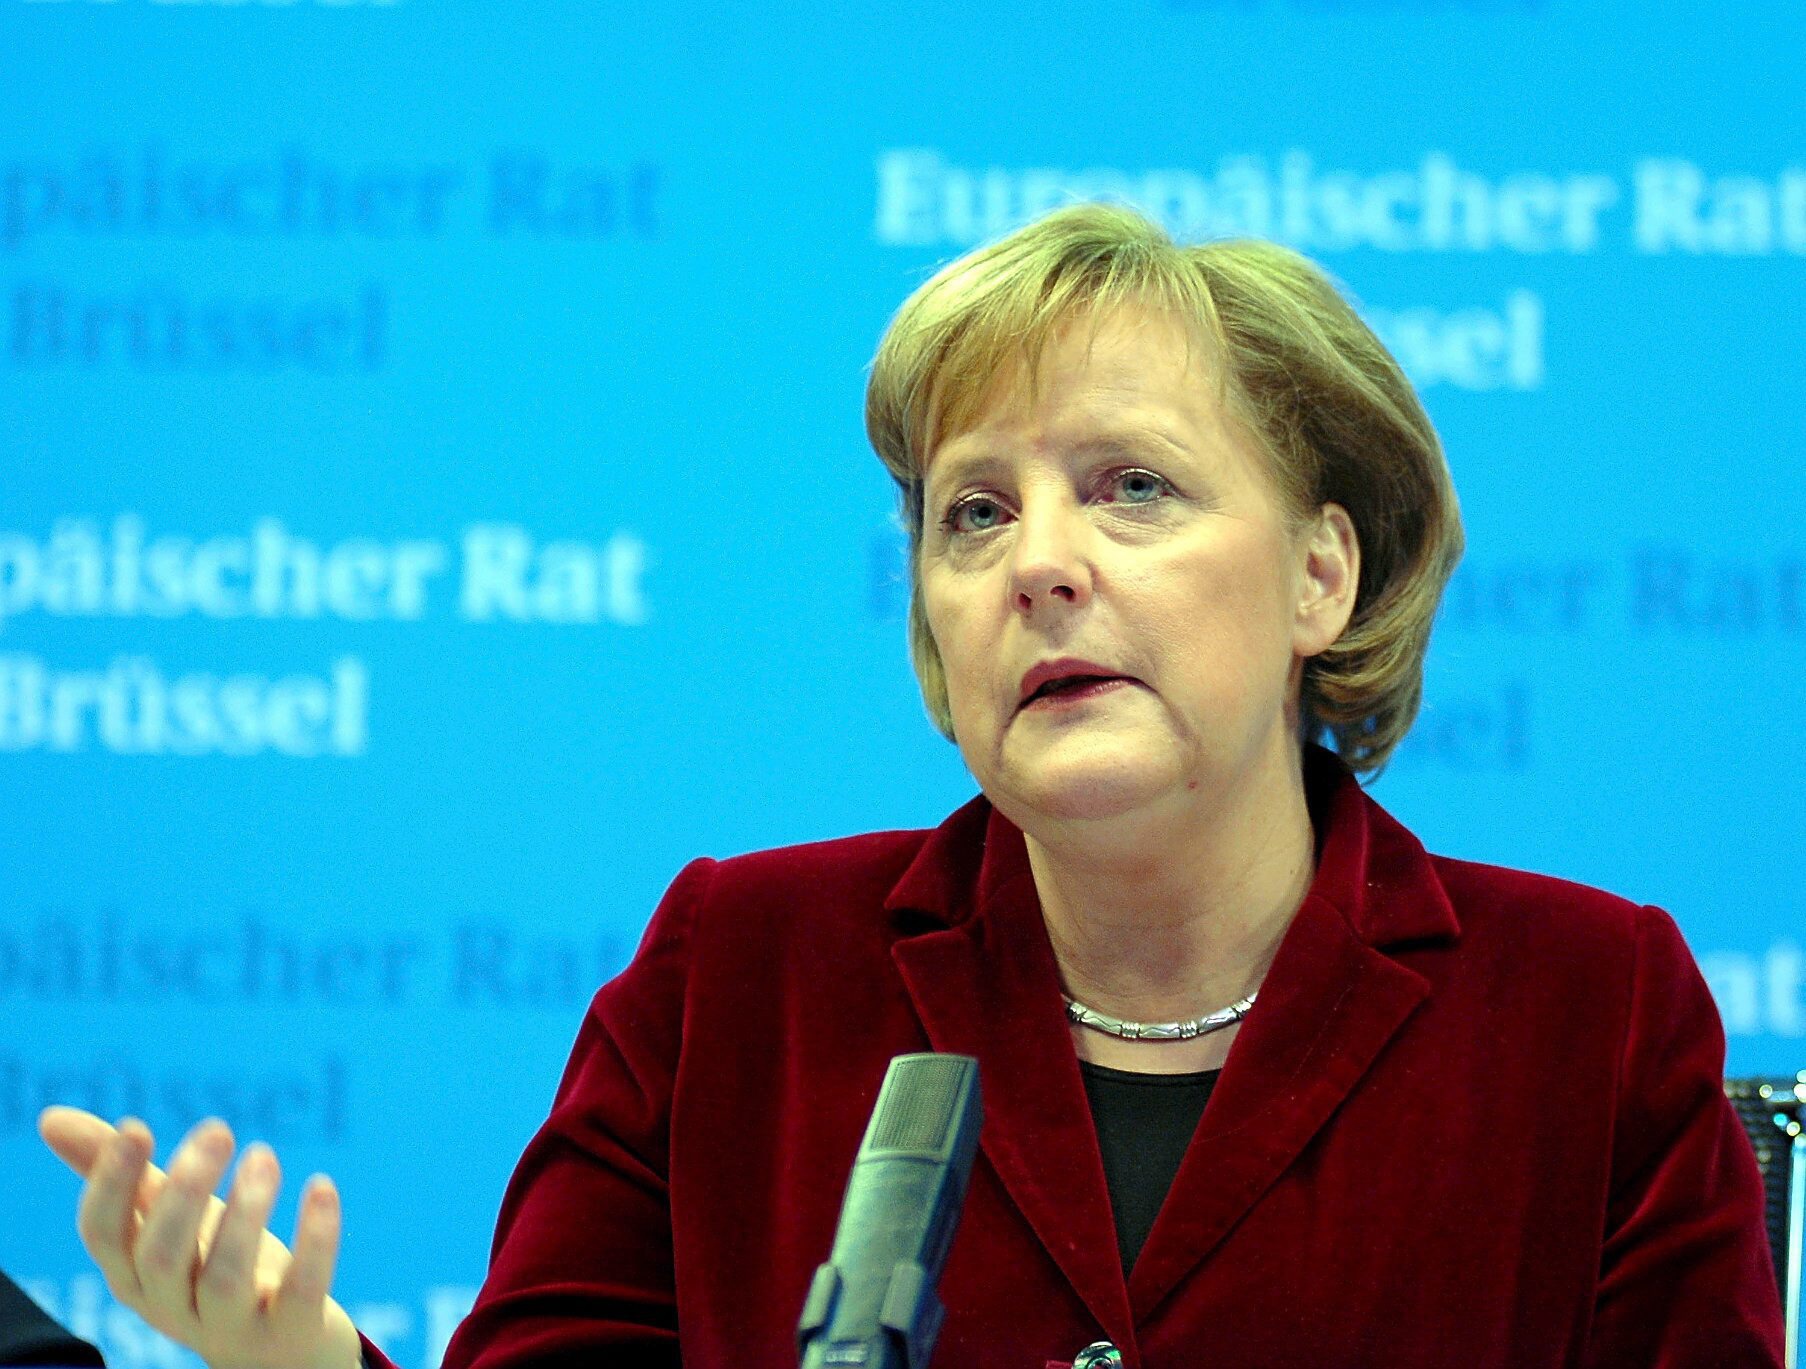 Angela Merkel trad in 2006 aan als bondskanselier van Duitsland. Foto: EPA